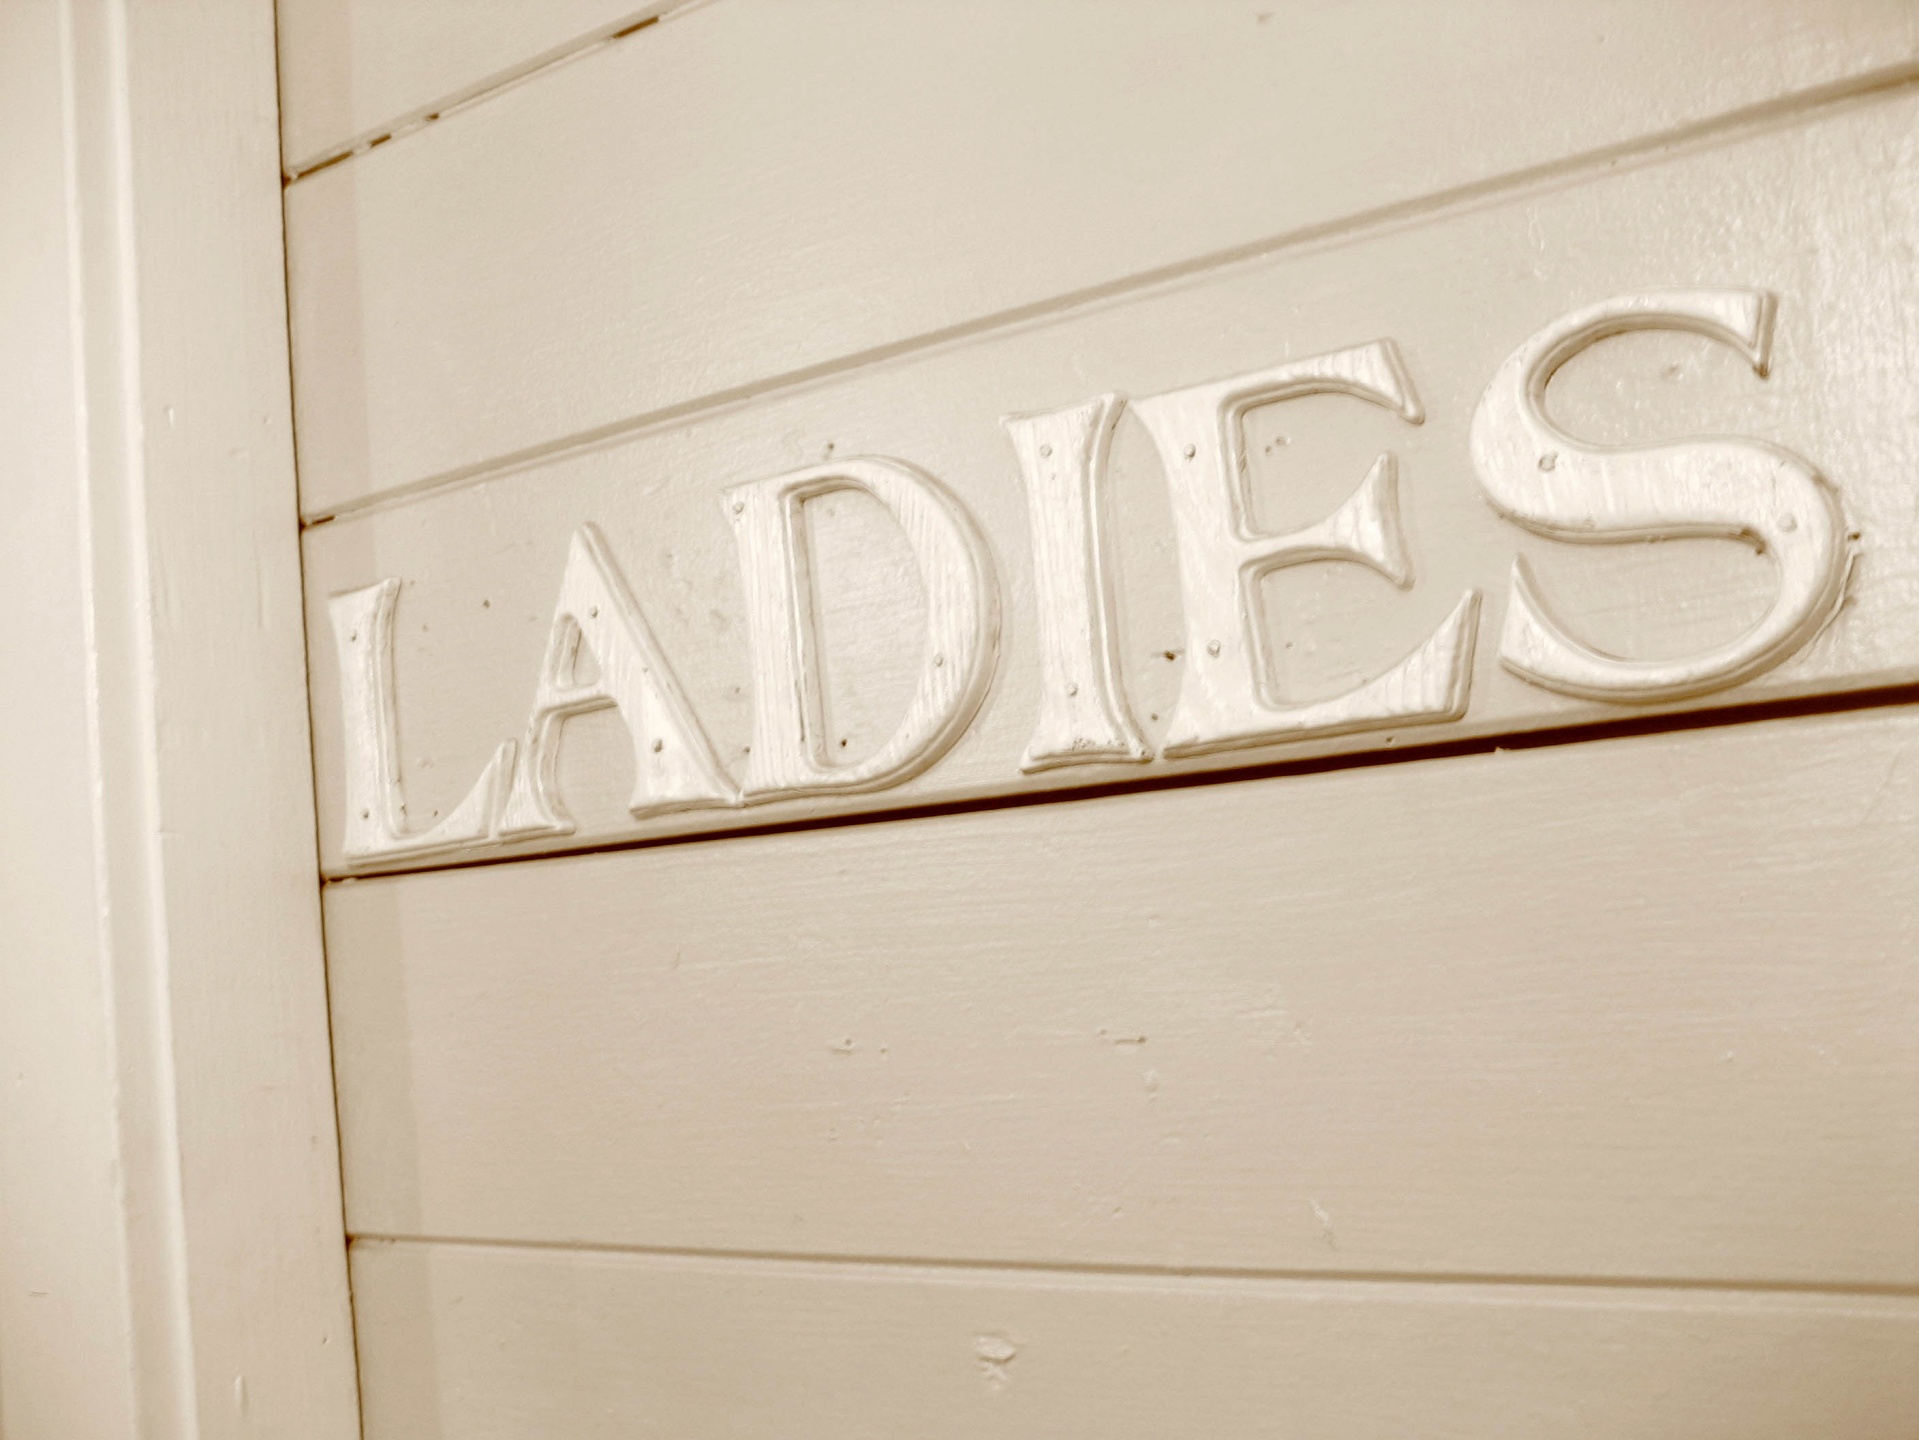 Ladies' Room: Where the line begins...